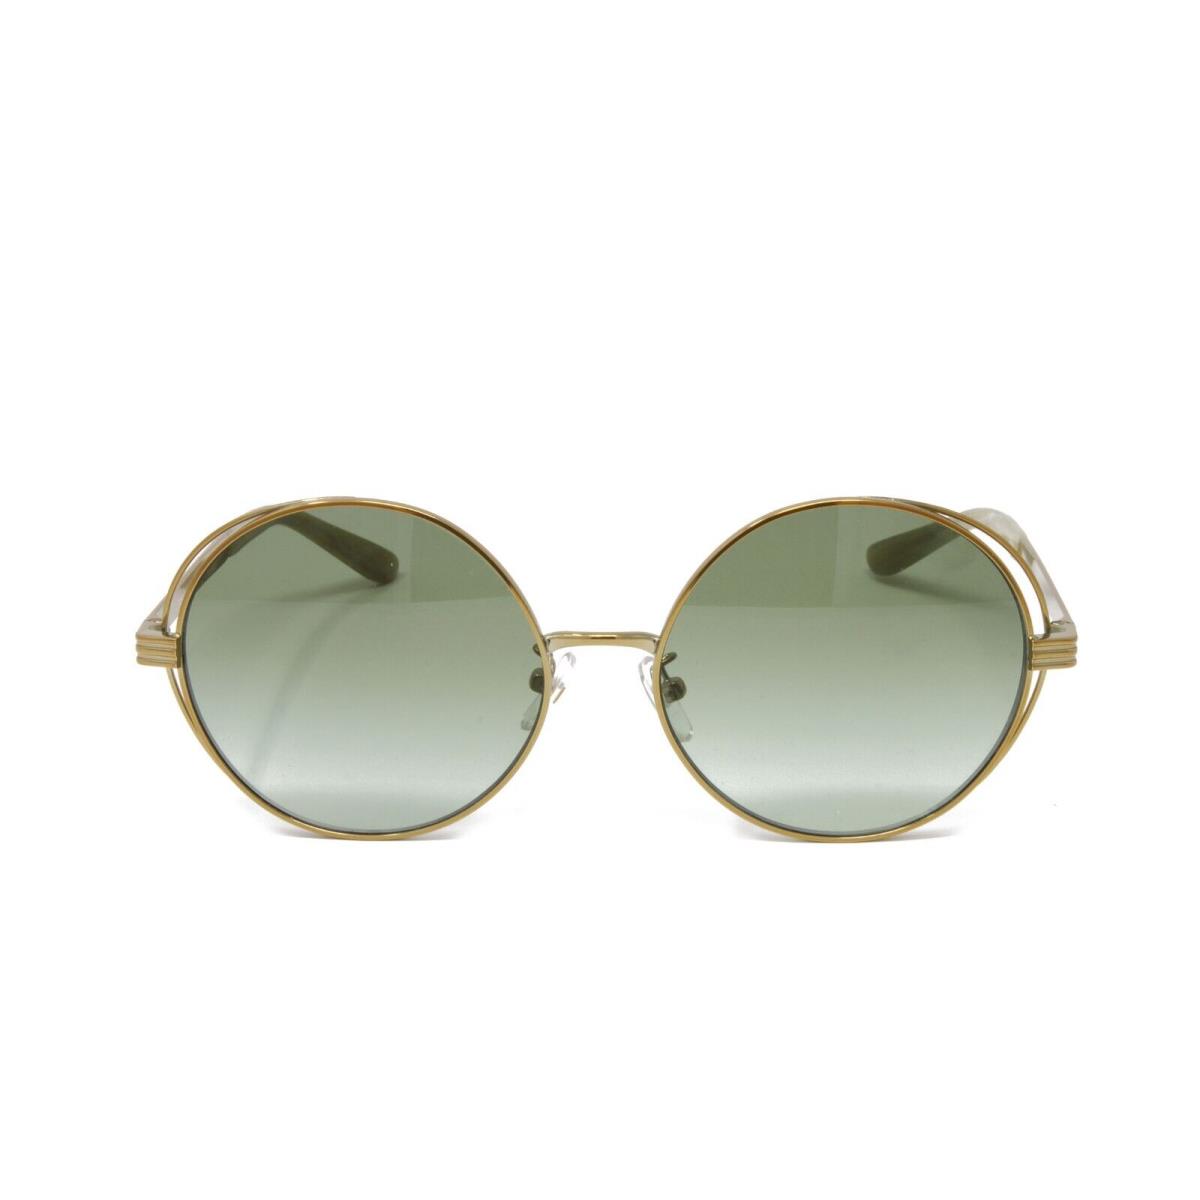 Tory Burch Round Fashion Sunglasses TY6085 3308S3 Shiny Gold 56mm Green Lens